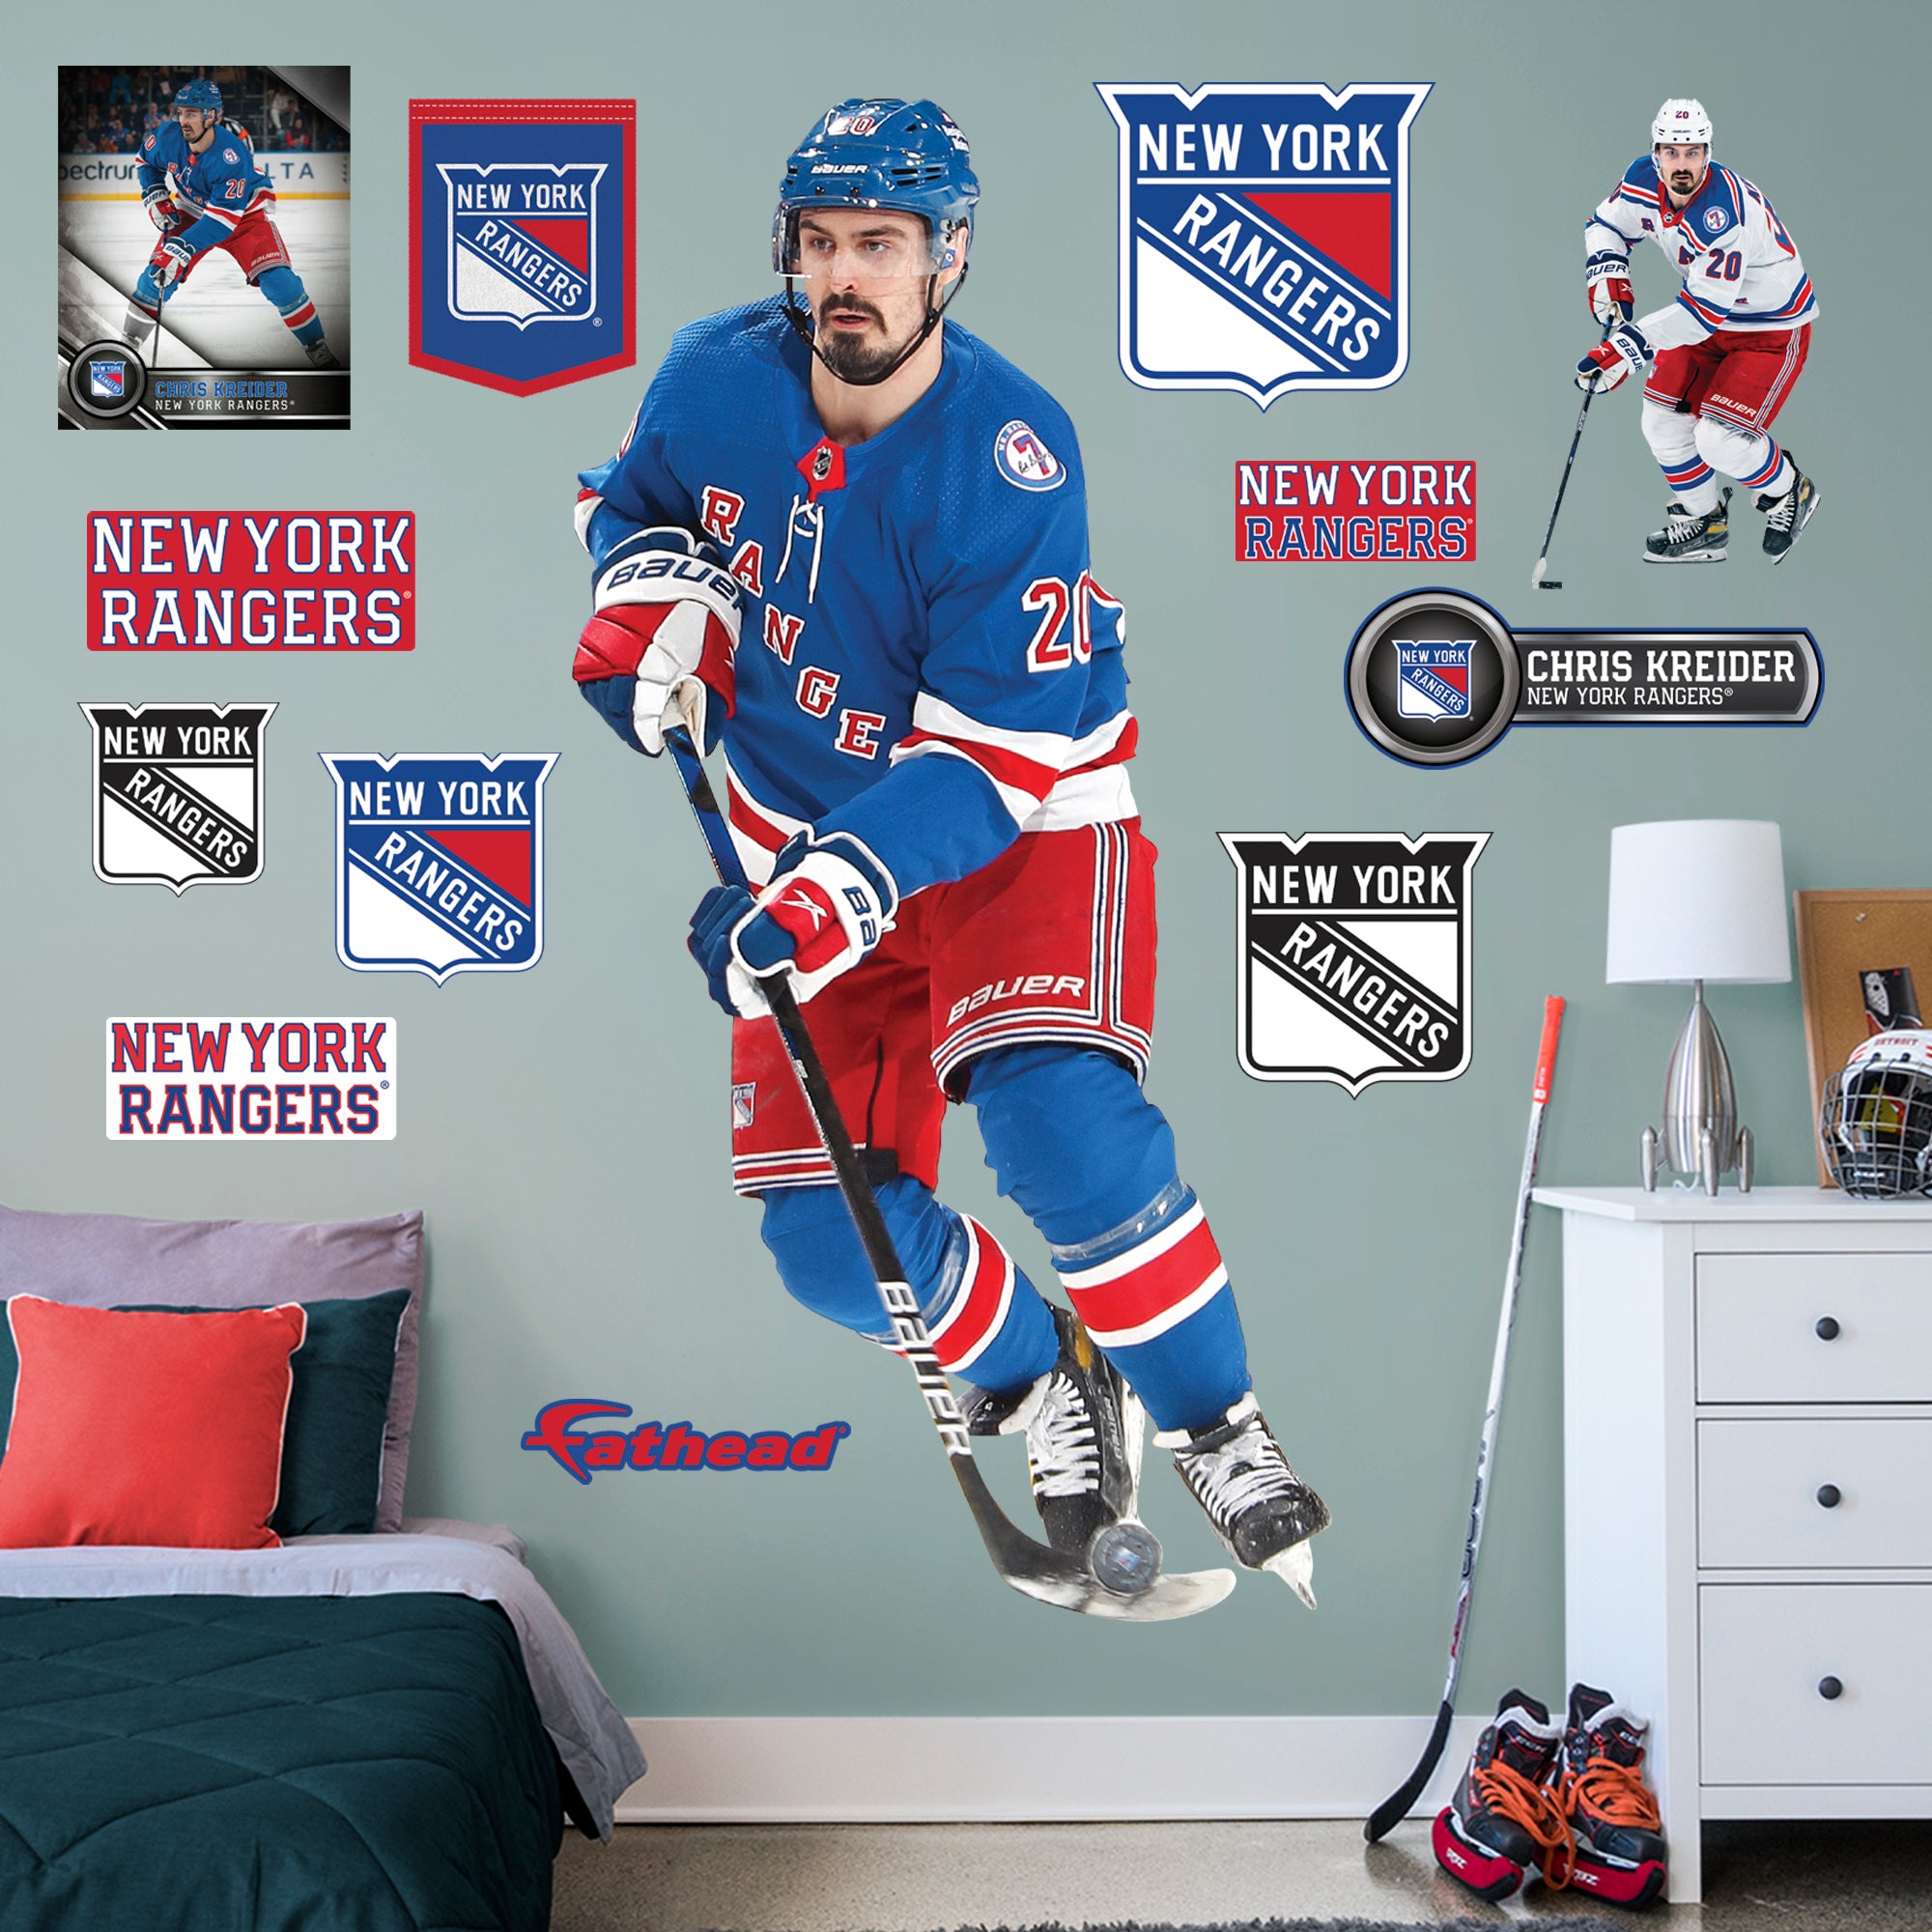 Chris Kreider 20 New York Rangers ice hockey player poster shirt